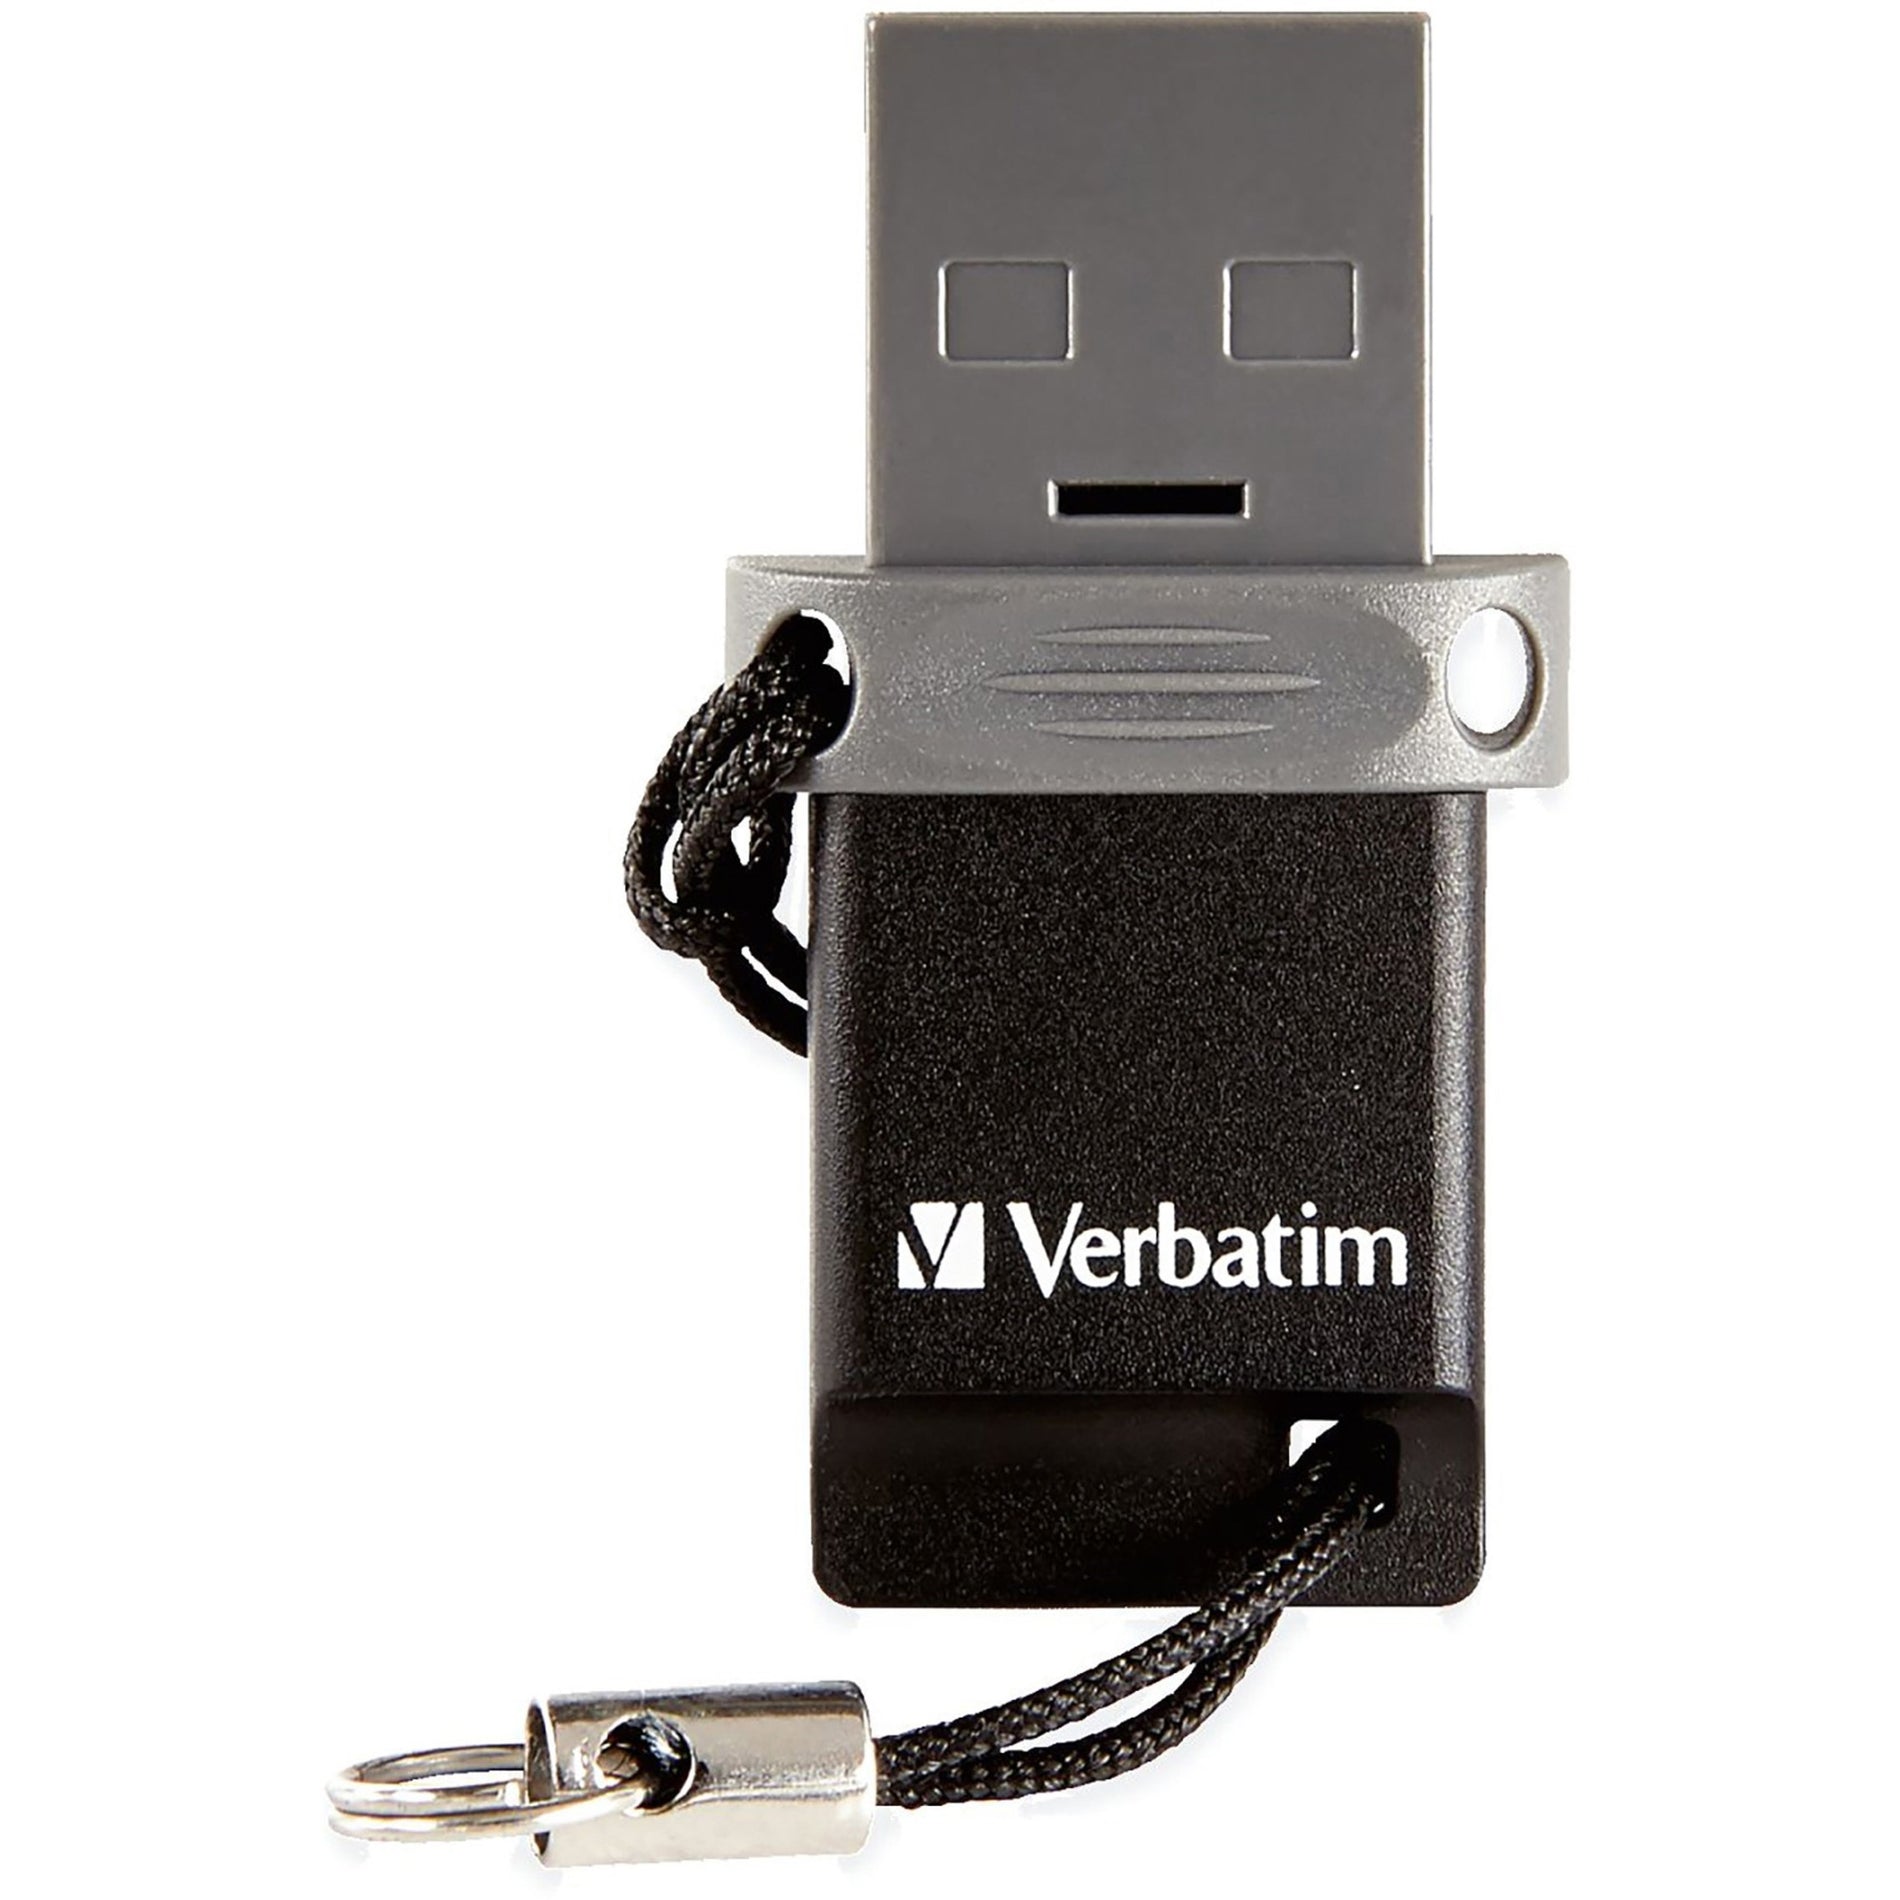 Verbatim 99139 Store 'n' Go Dual USB Flash Drive, 32GB, BK/GY